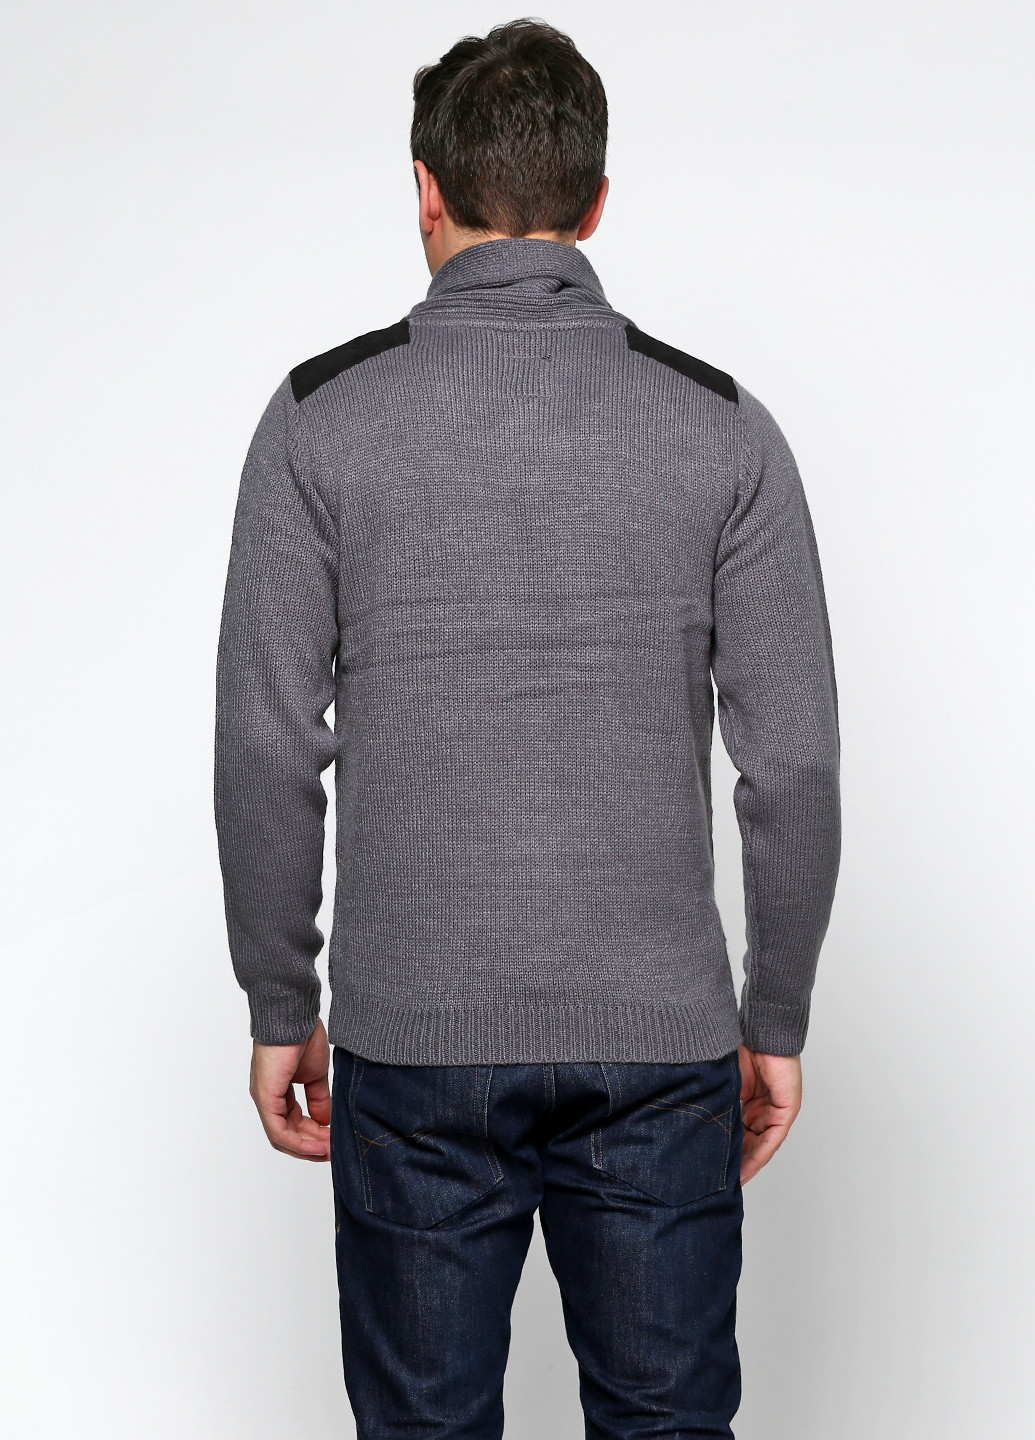 Серый демисезонный пуловер пуловер Fresh